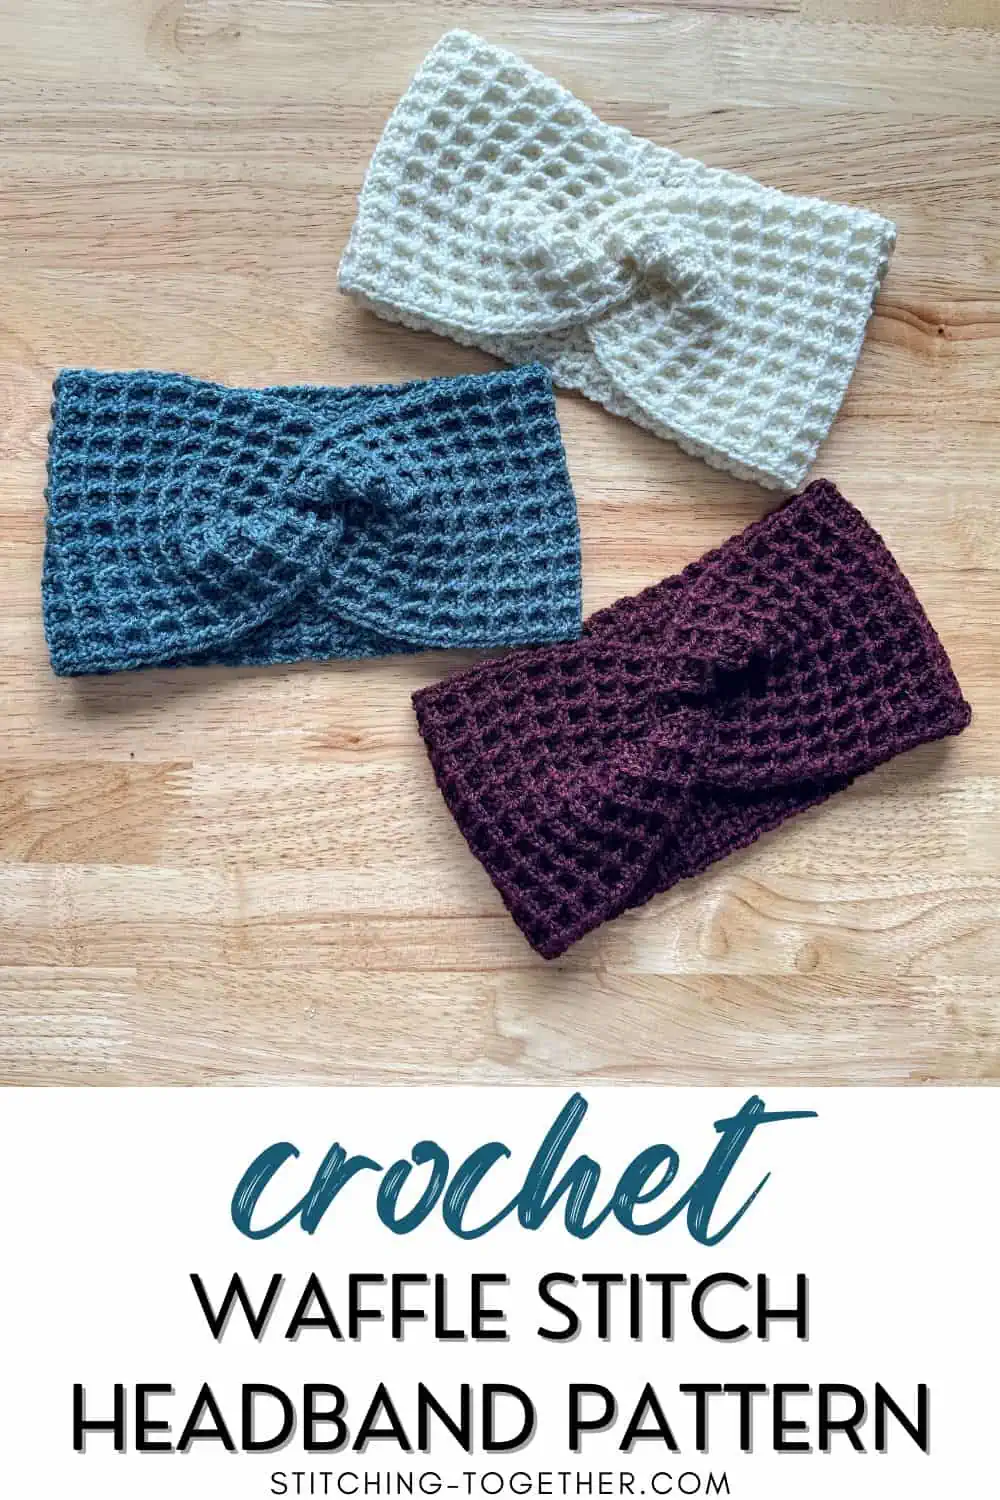 three waffle stitch headbands with text reading "crochet waffle stitch headband pattern"